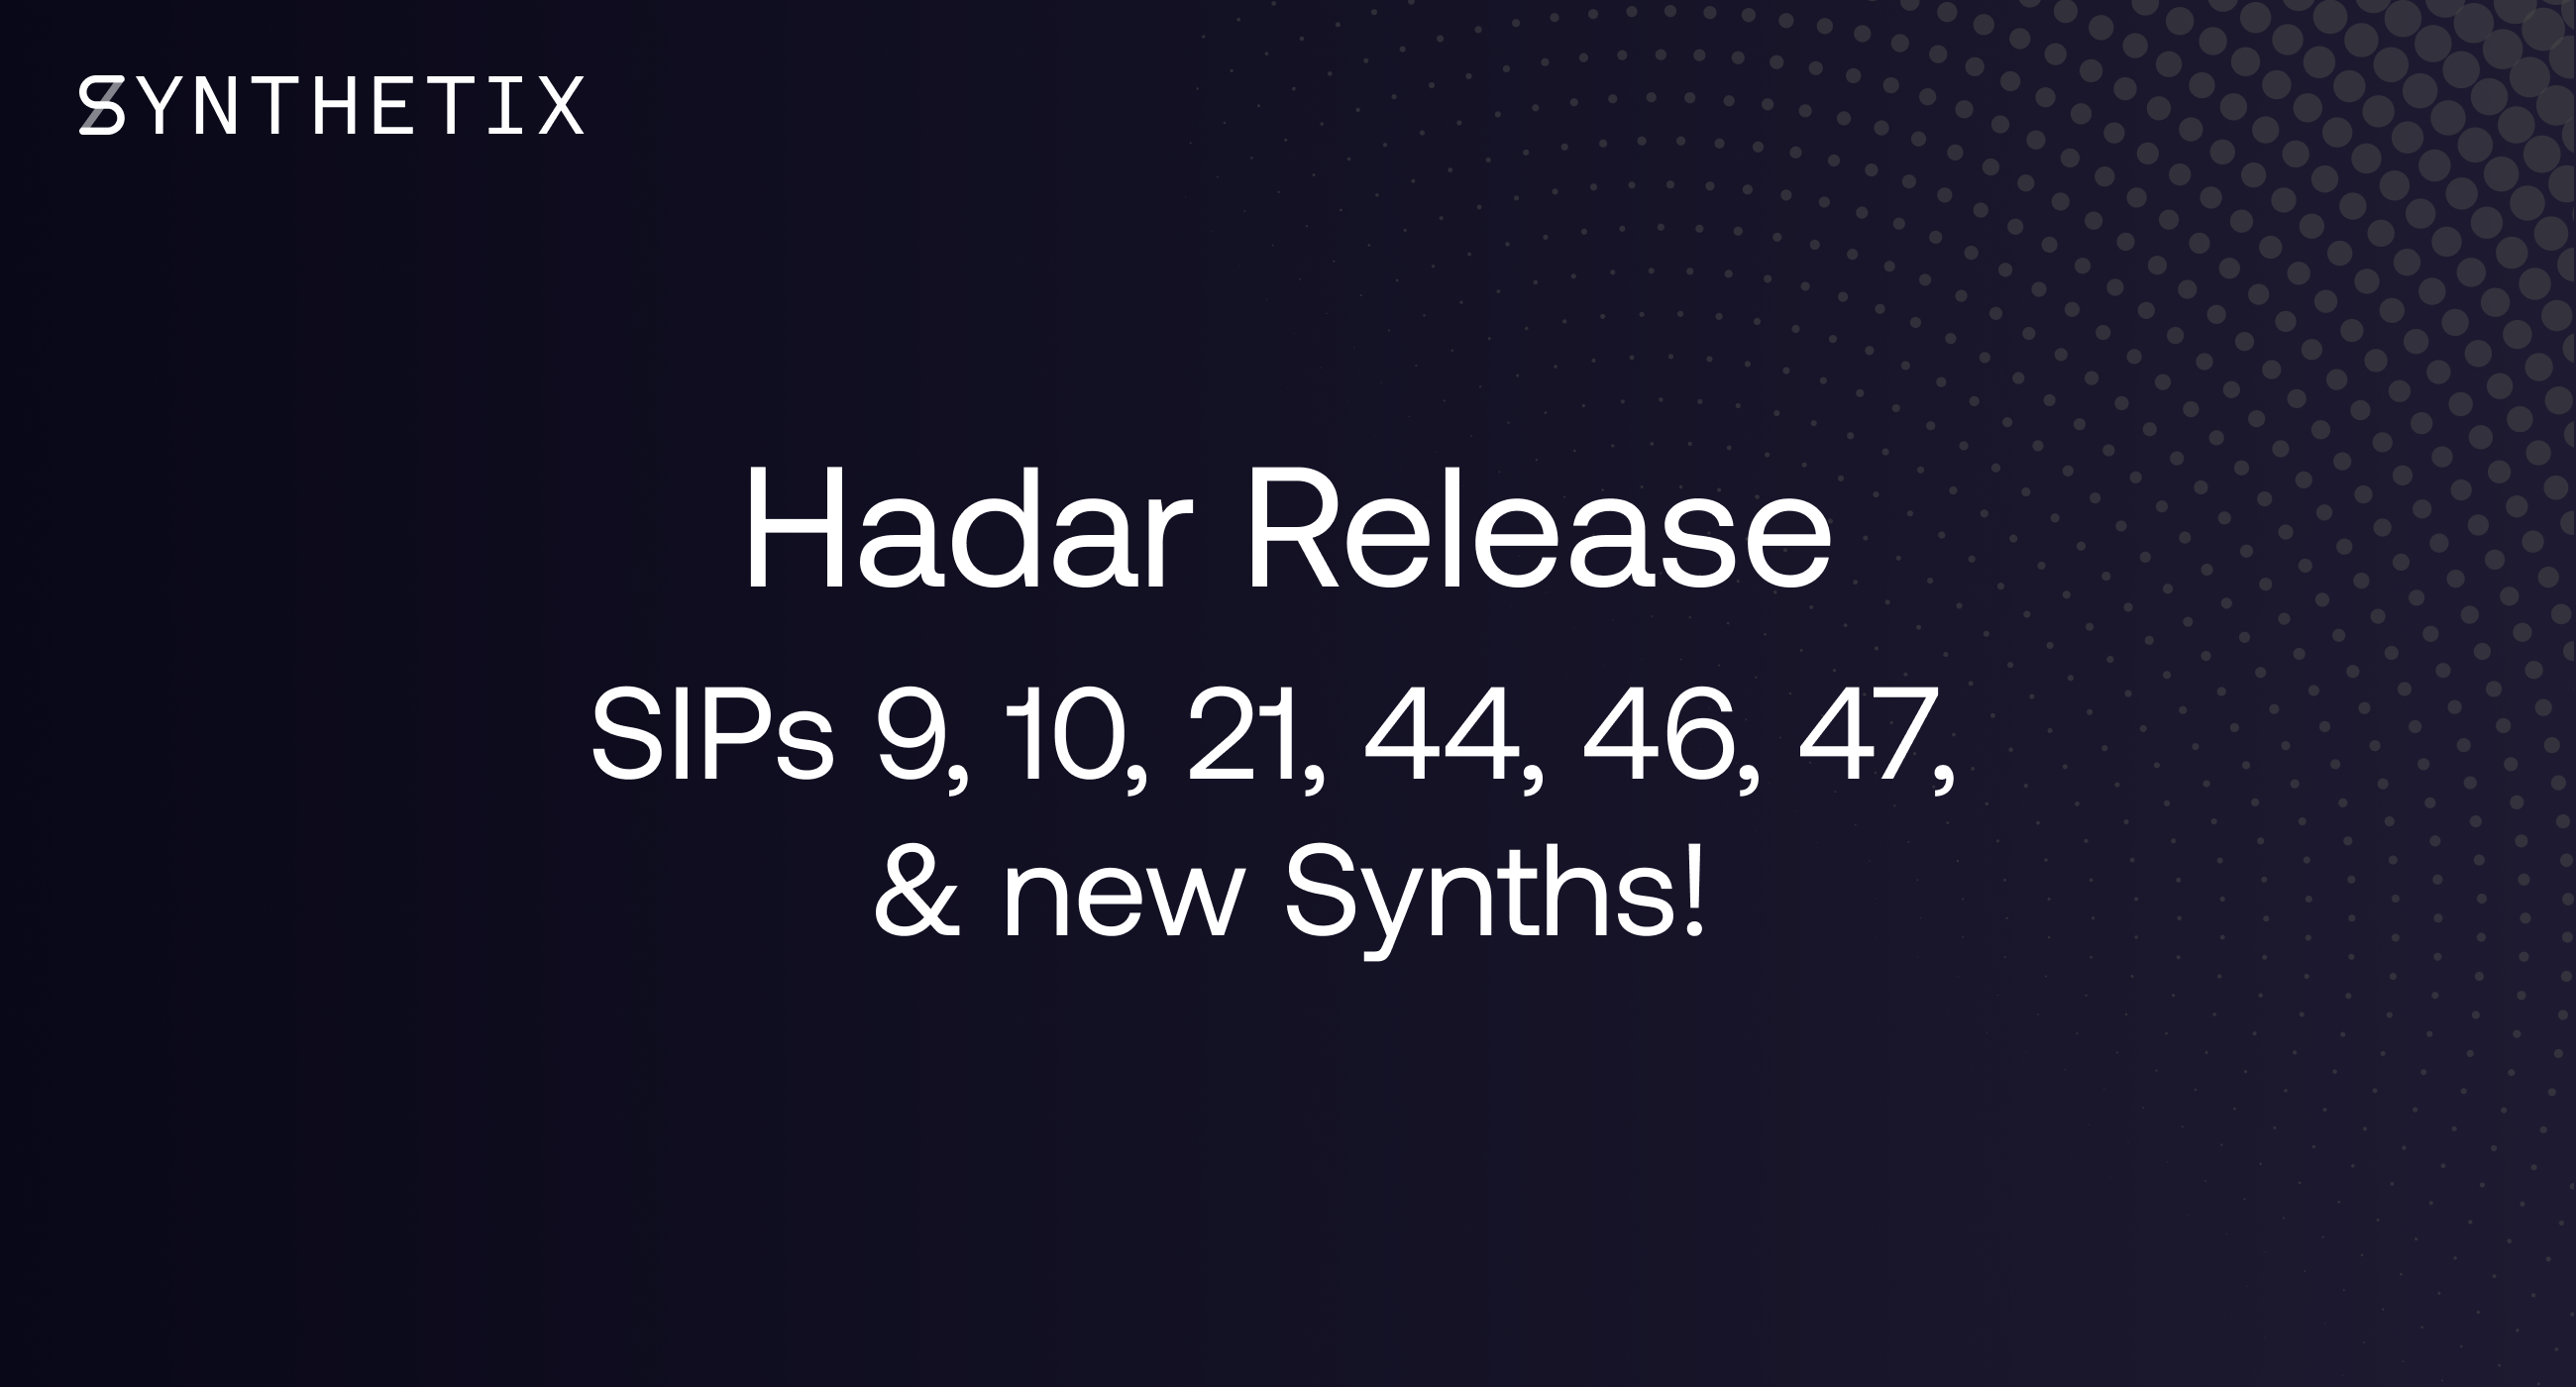 The Hadar release